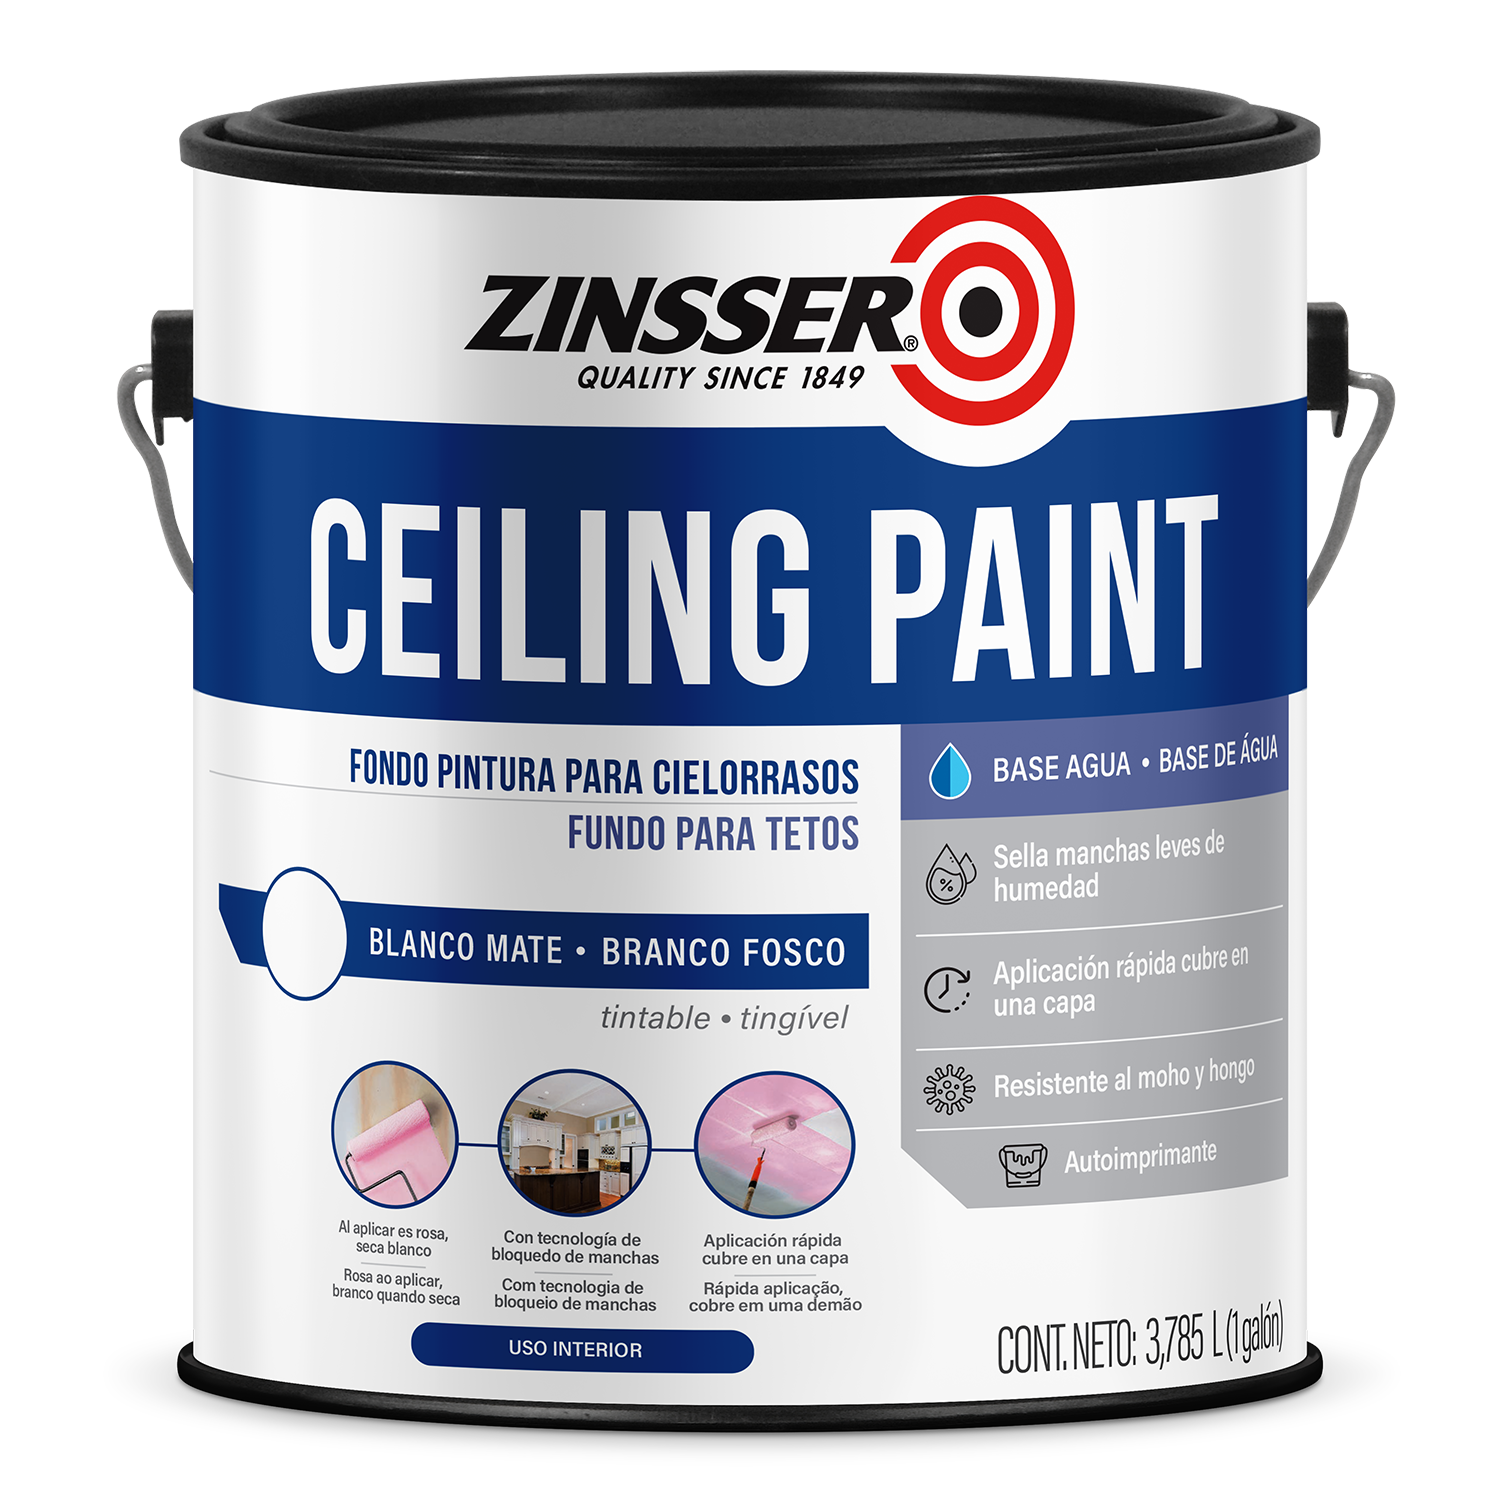 Zinsser Ceiling Paint - Fondo y Pintura para Cielorrasos